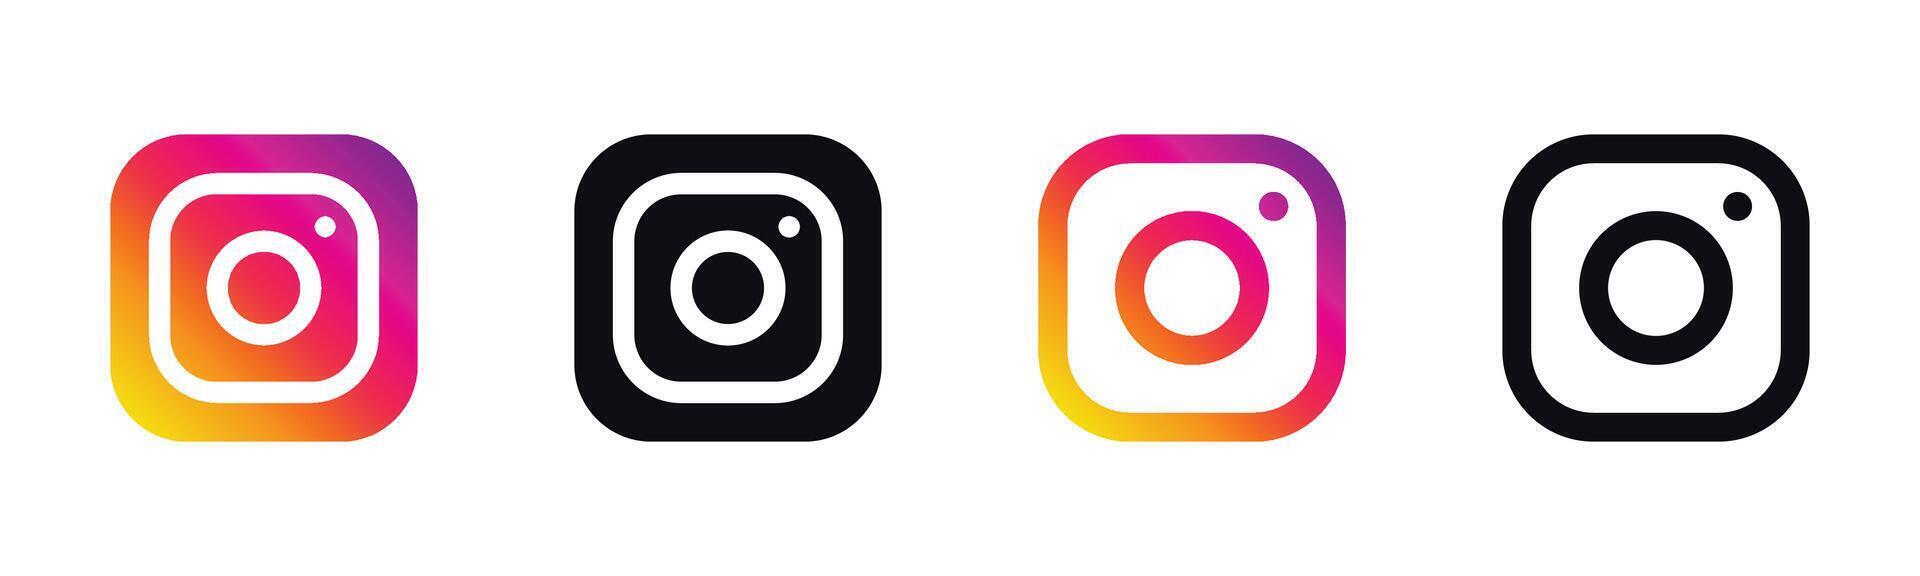 Instagram Logo Icon Set - Social Media Brand Symbols Vector Graphics